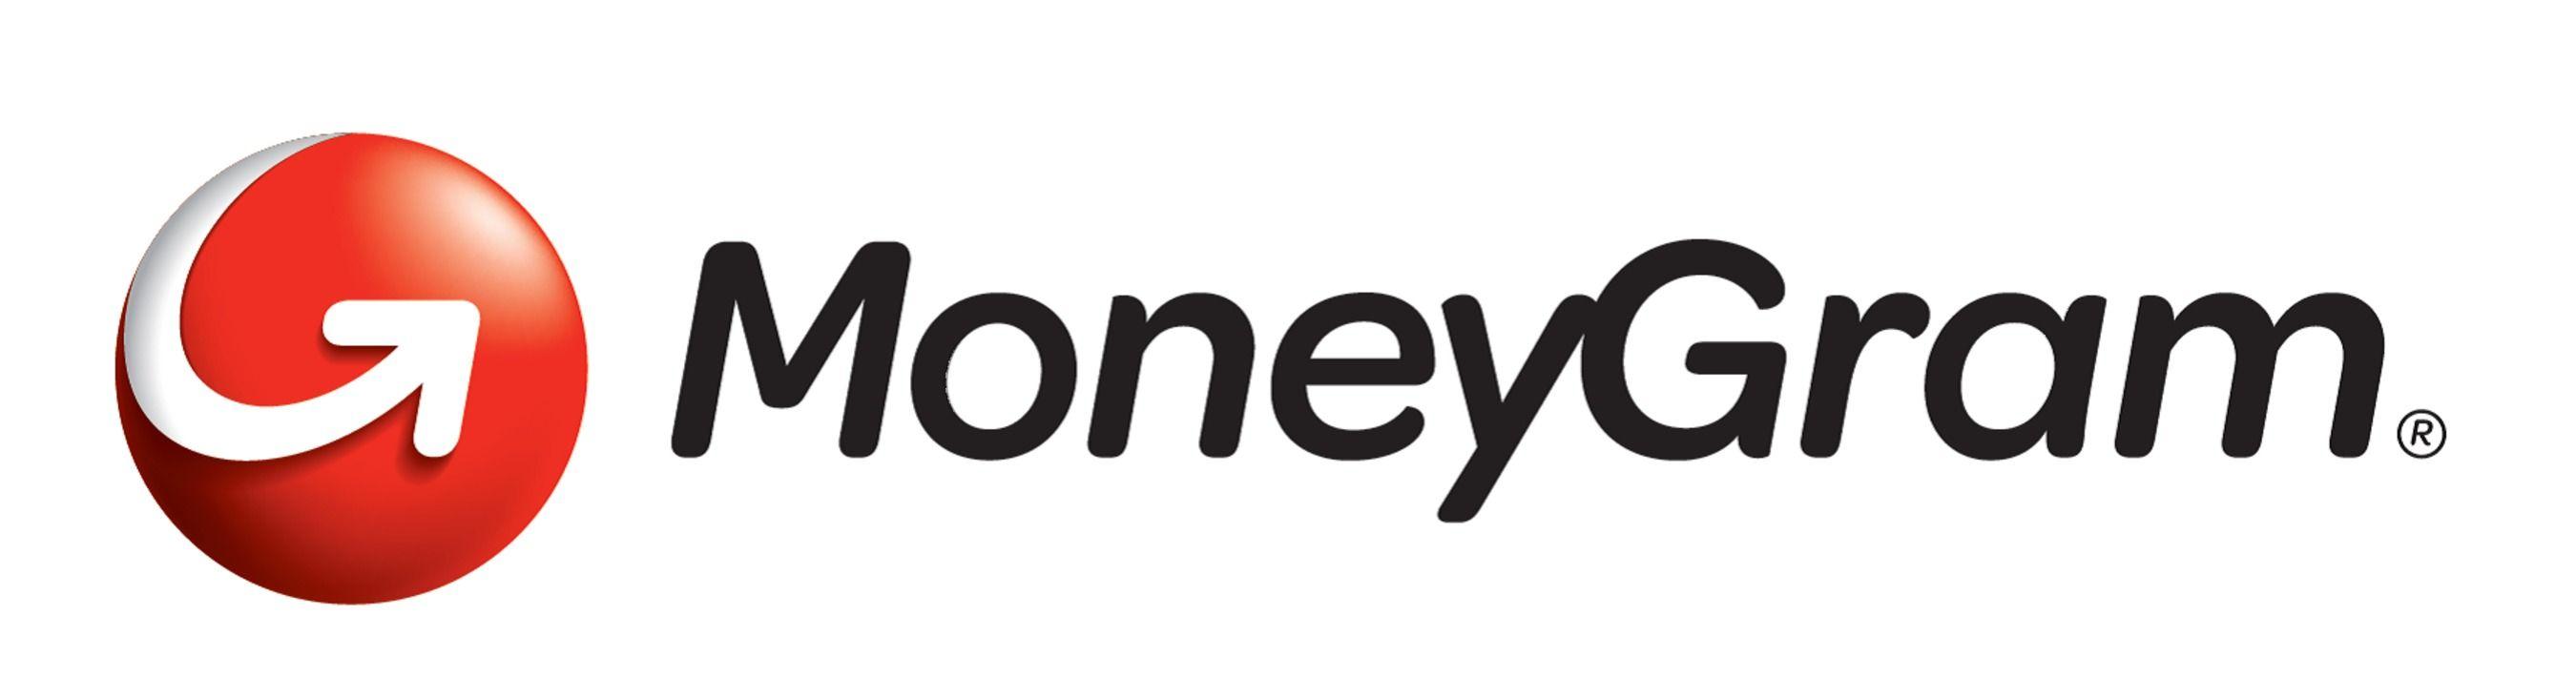 MoneyGram Logo - MoneyGram Launches new Online Money Transfer Service Platform with ...